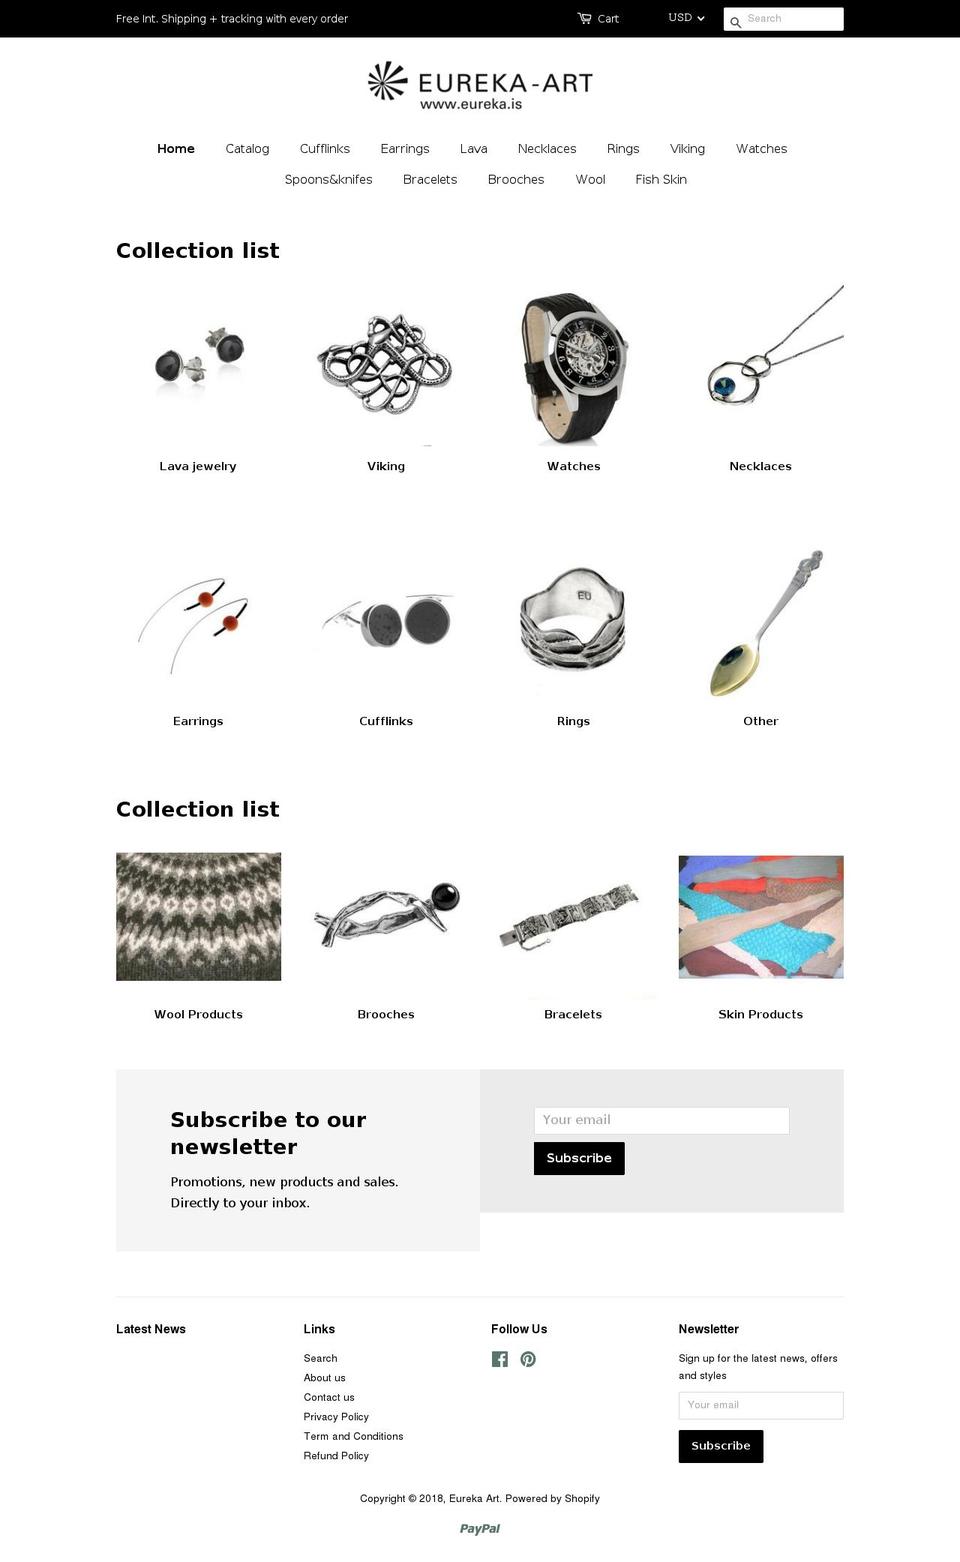 eureka.is shopify website screenshot